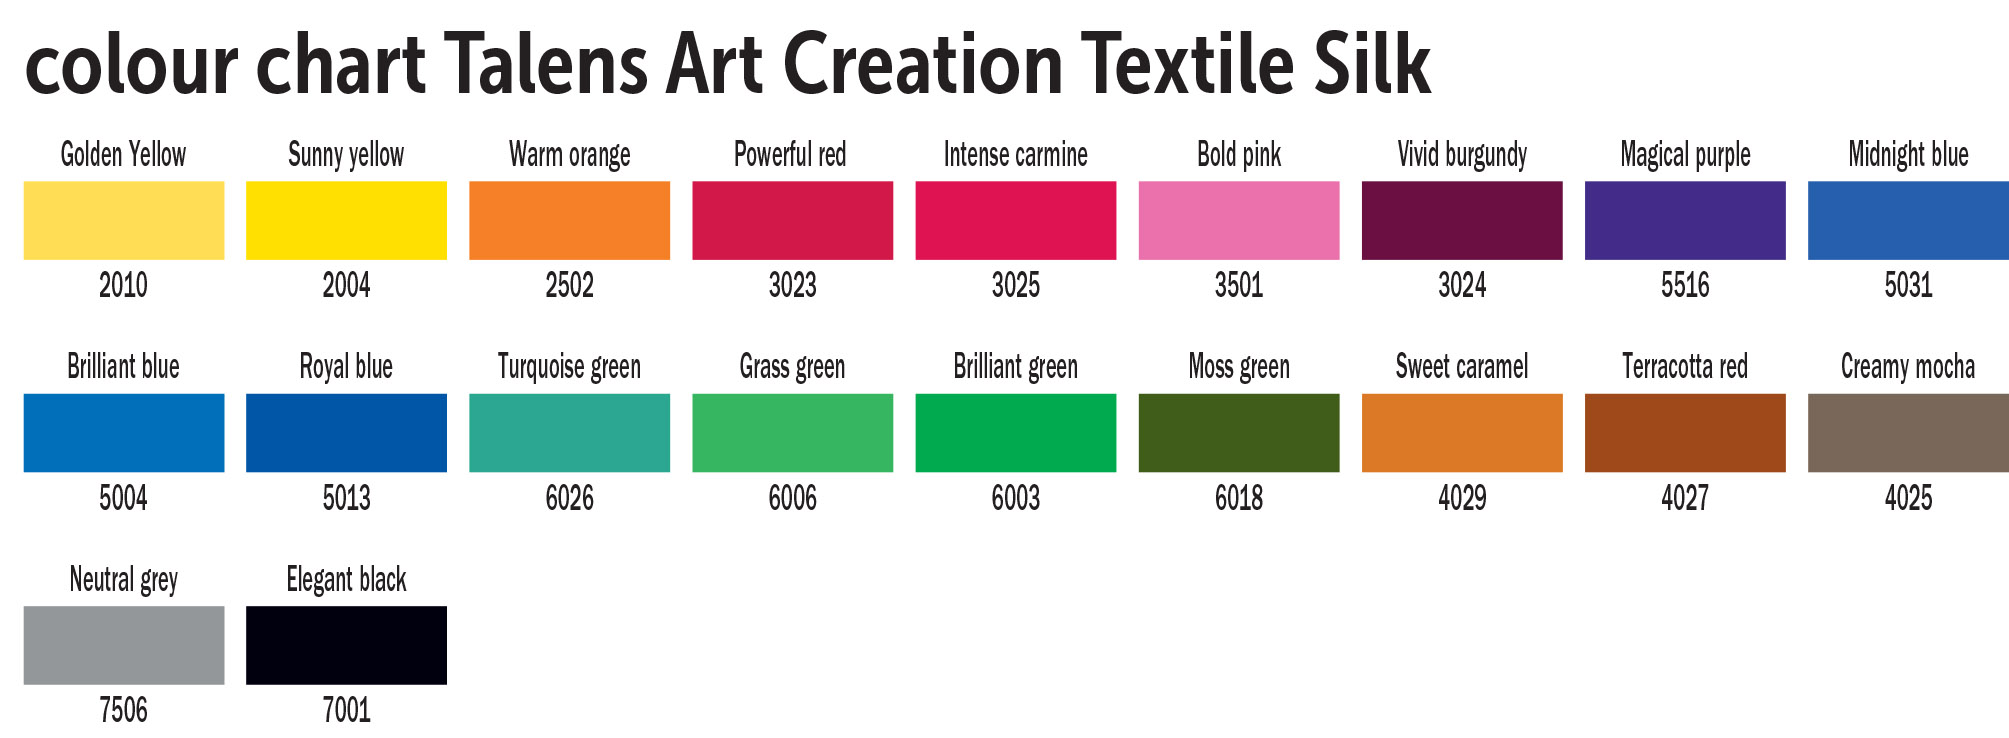 Textile silk